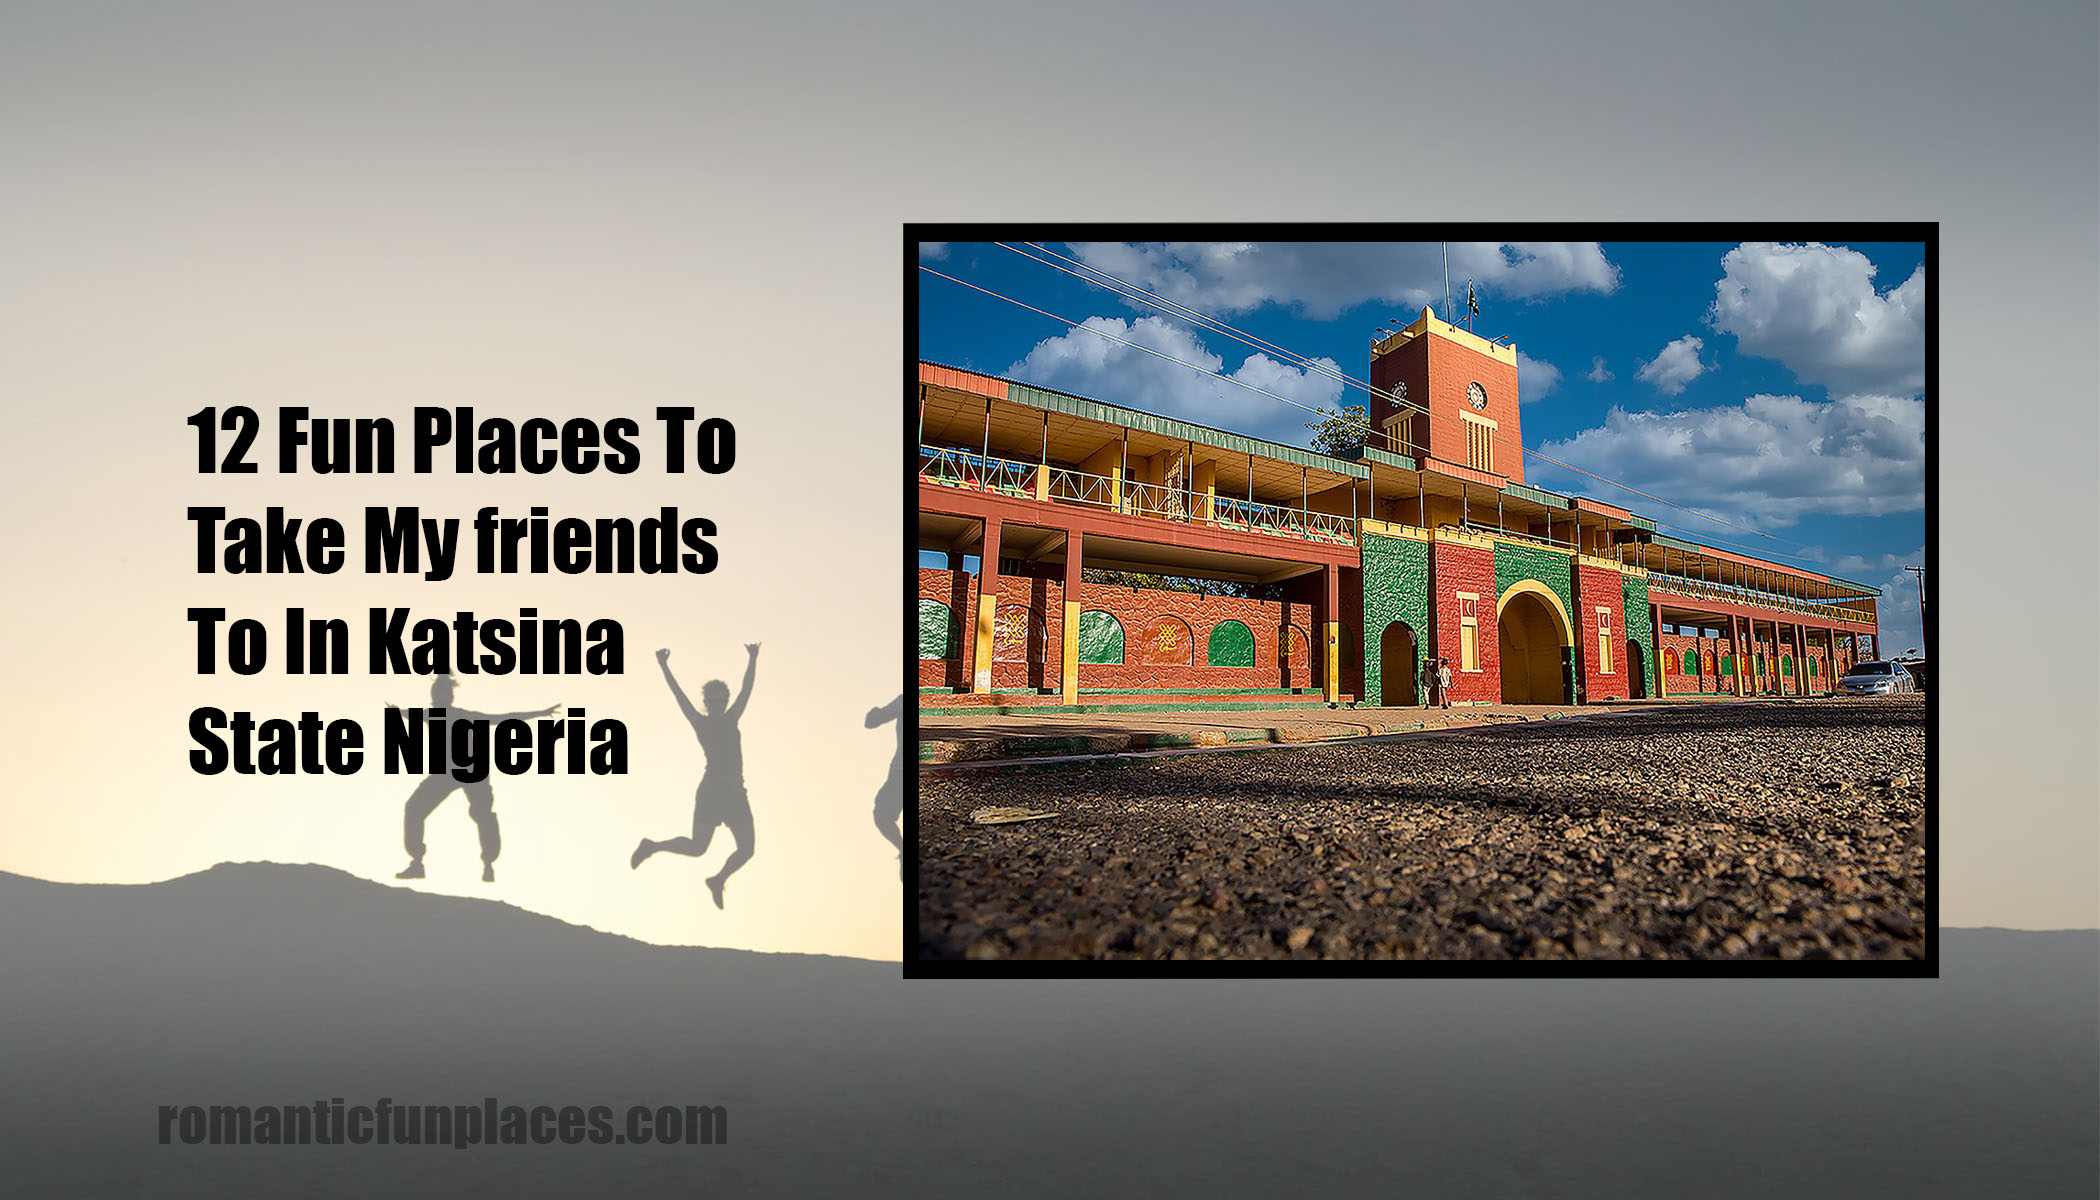 12 Fun Places To Take My friends To In Katsina State Nigeria